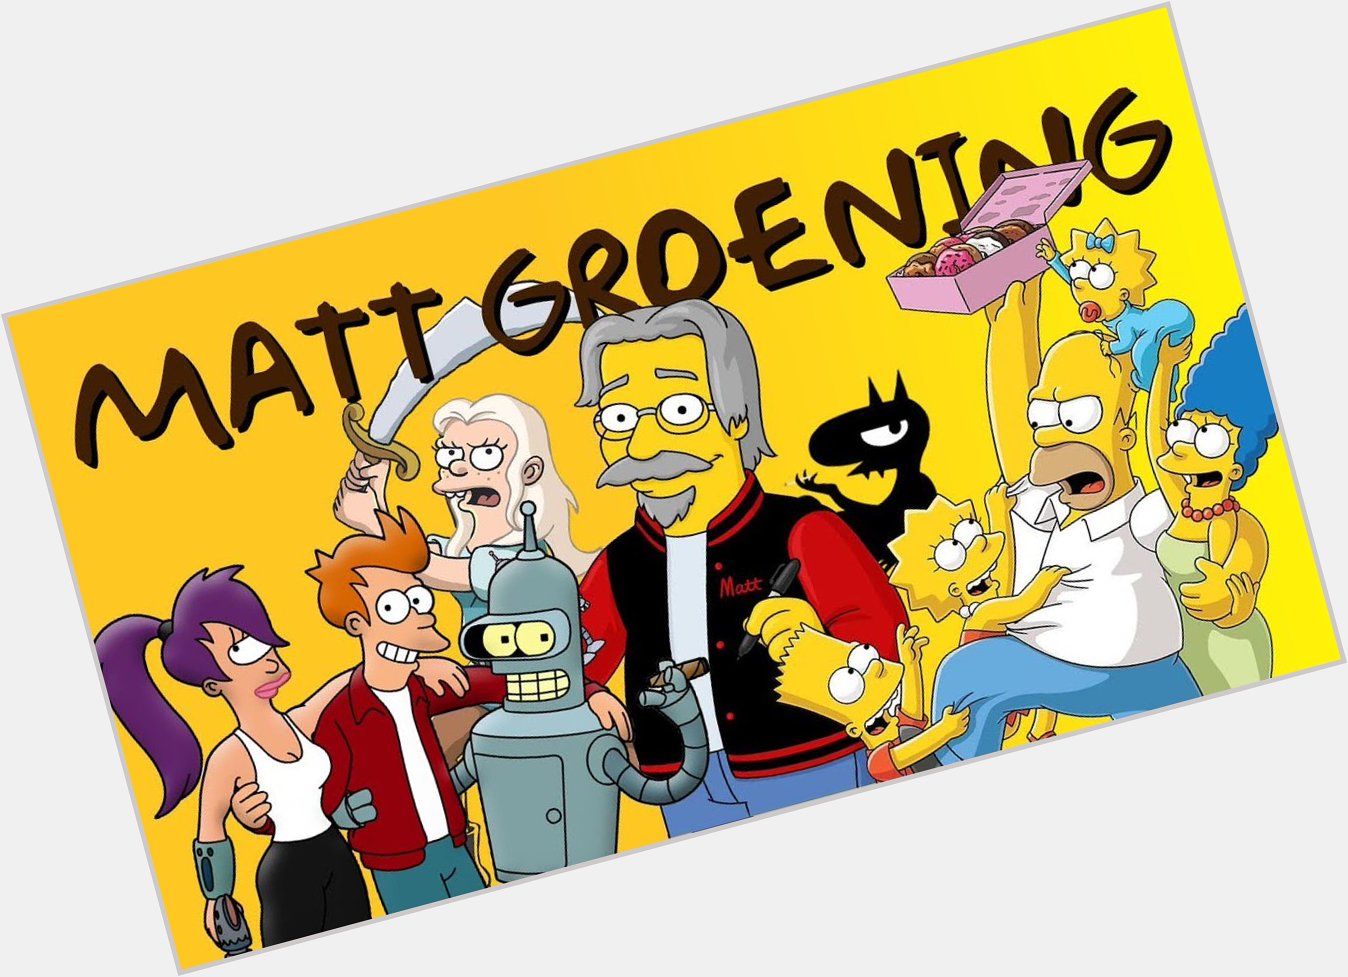 Happy birthday to the creator of The Simpsons, Futurama and Disenchantment, Matt Groening! 